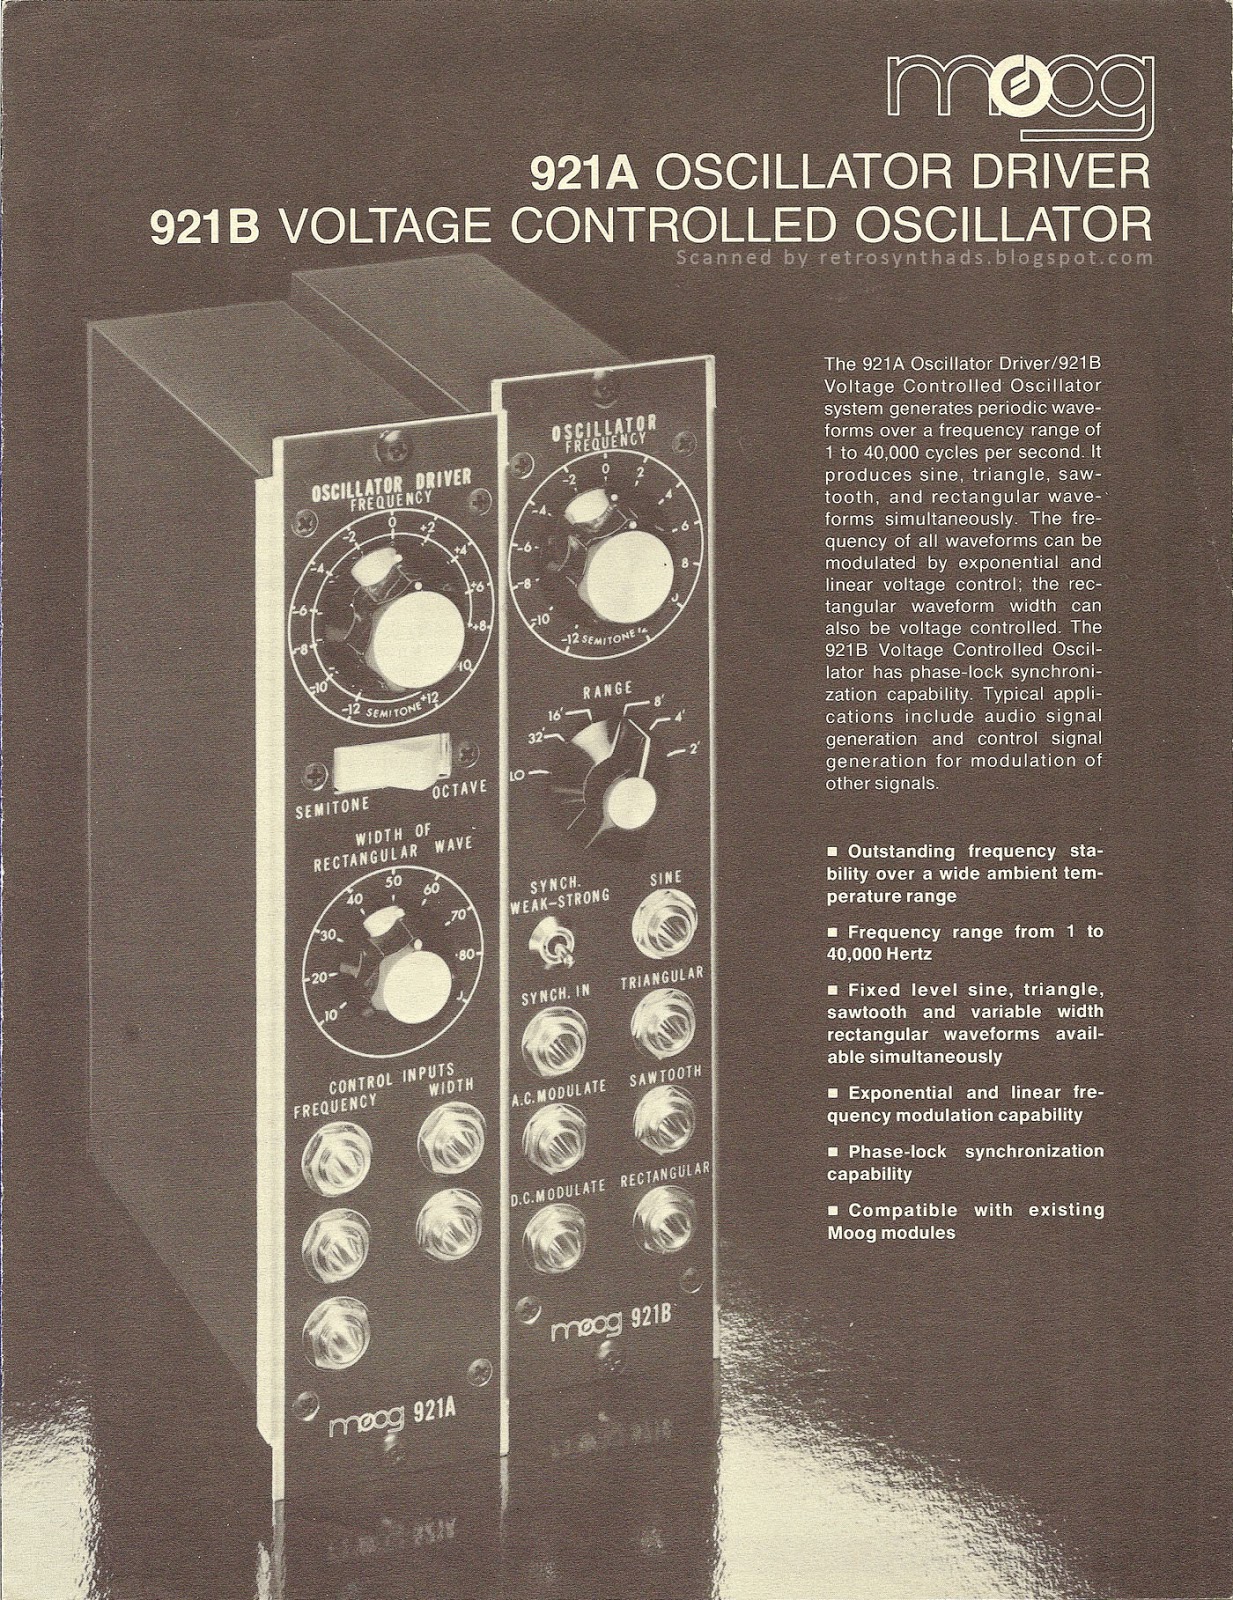 http://retrosynthads.blogspot.ca/2014/09/moog-921a-oscillator-driver921b-voltage.html